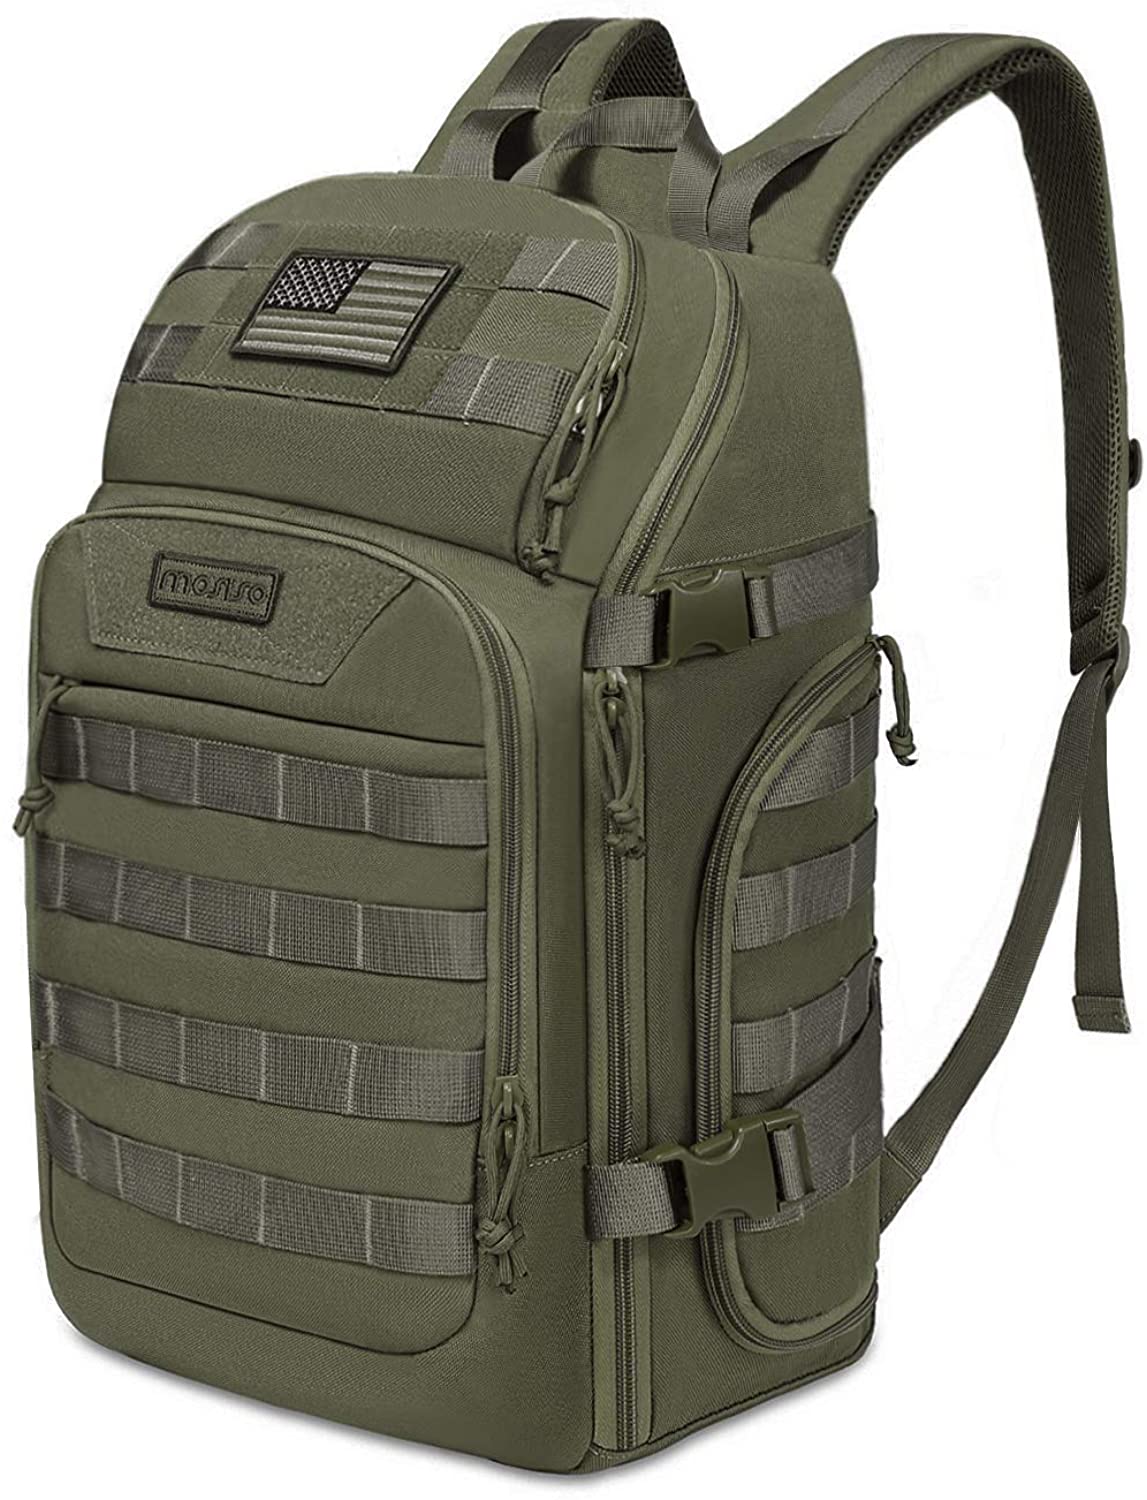 MOSISO Tactical Backpack 3 Day Molle Rucksack Hiking Daypack Men Tactical Range